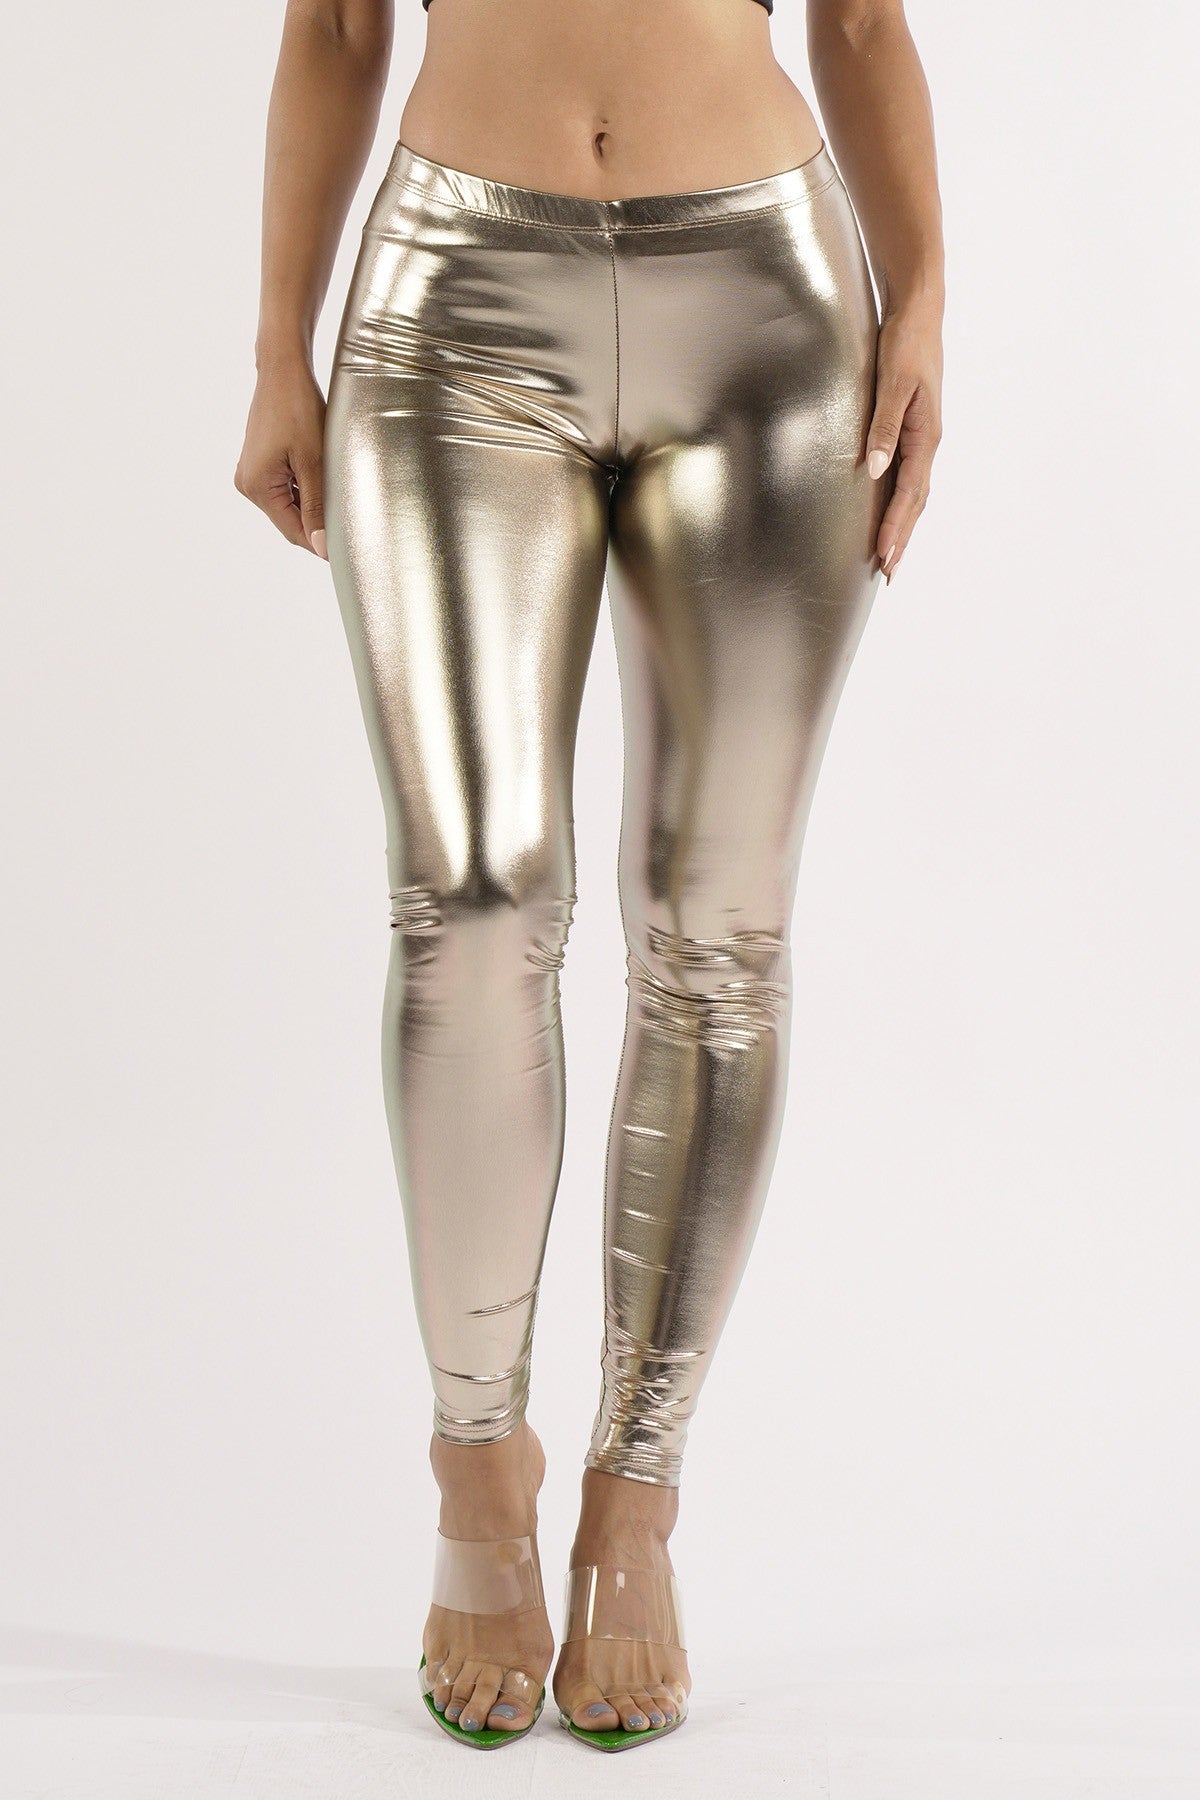 Girls Metallic Shiny Leggings Dance Disco Foil Red Tight Pants Wet Look  Costumes | eBay